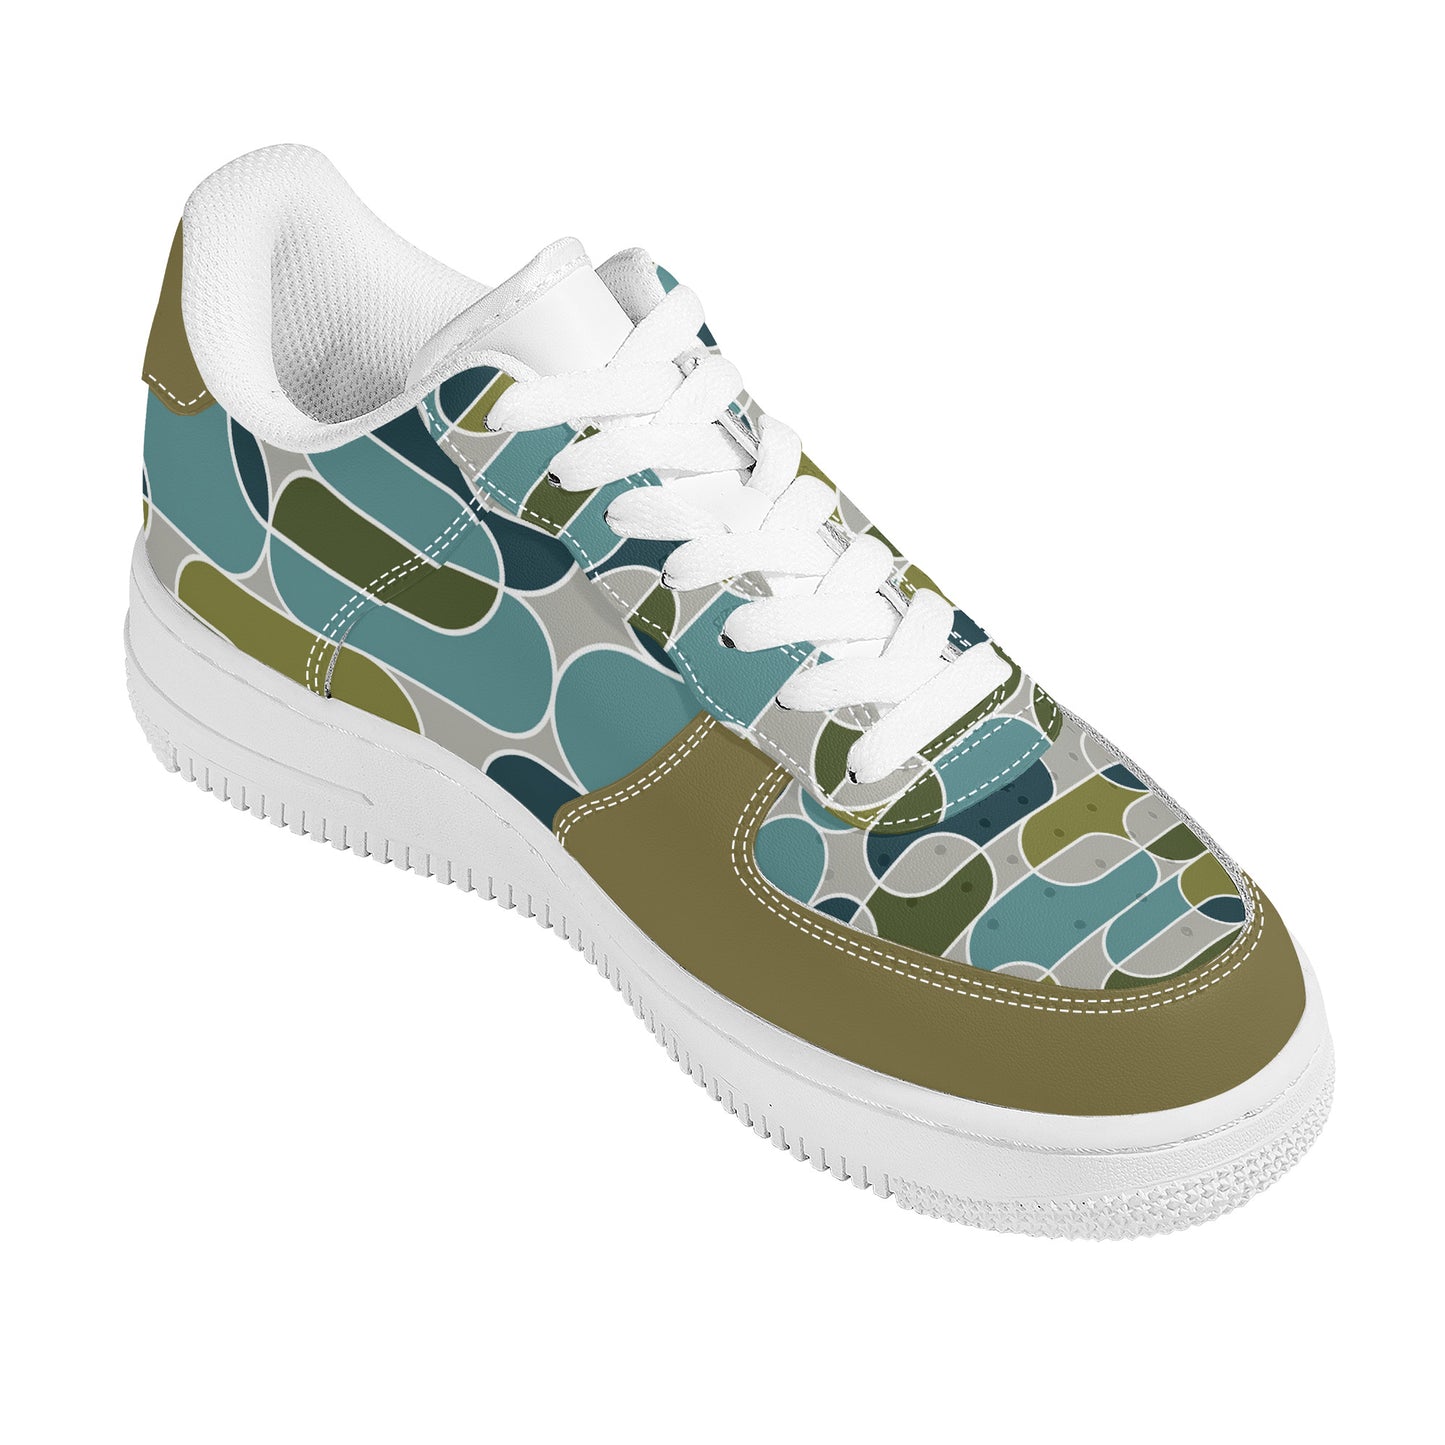 Low Top Unisex Sneaker - Olive Green